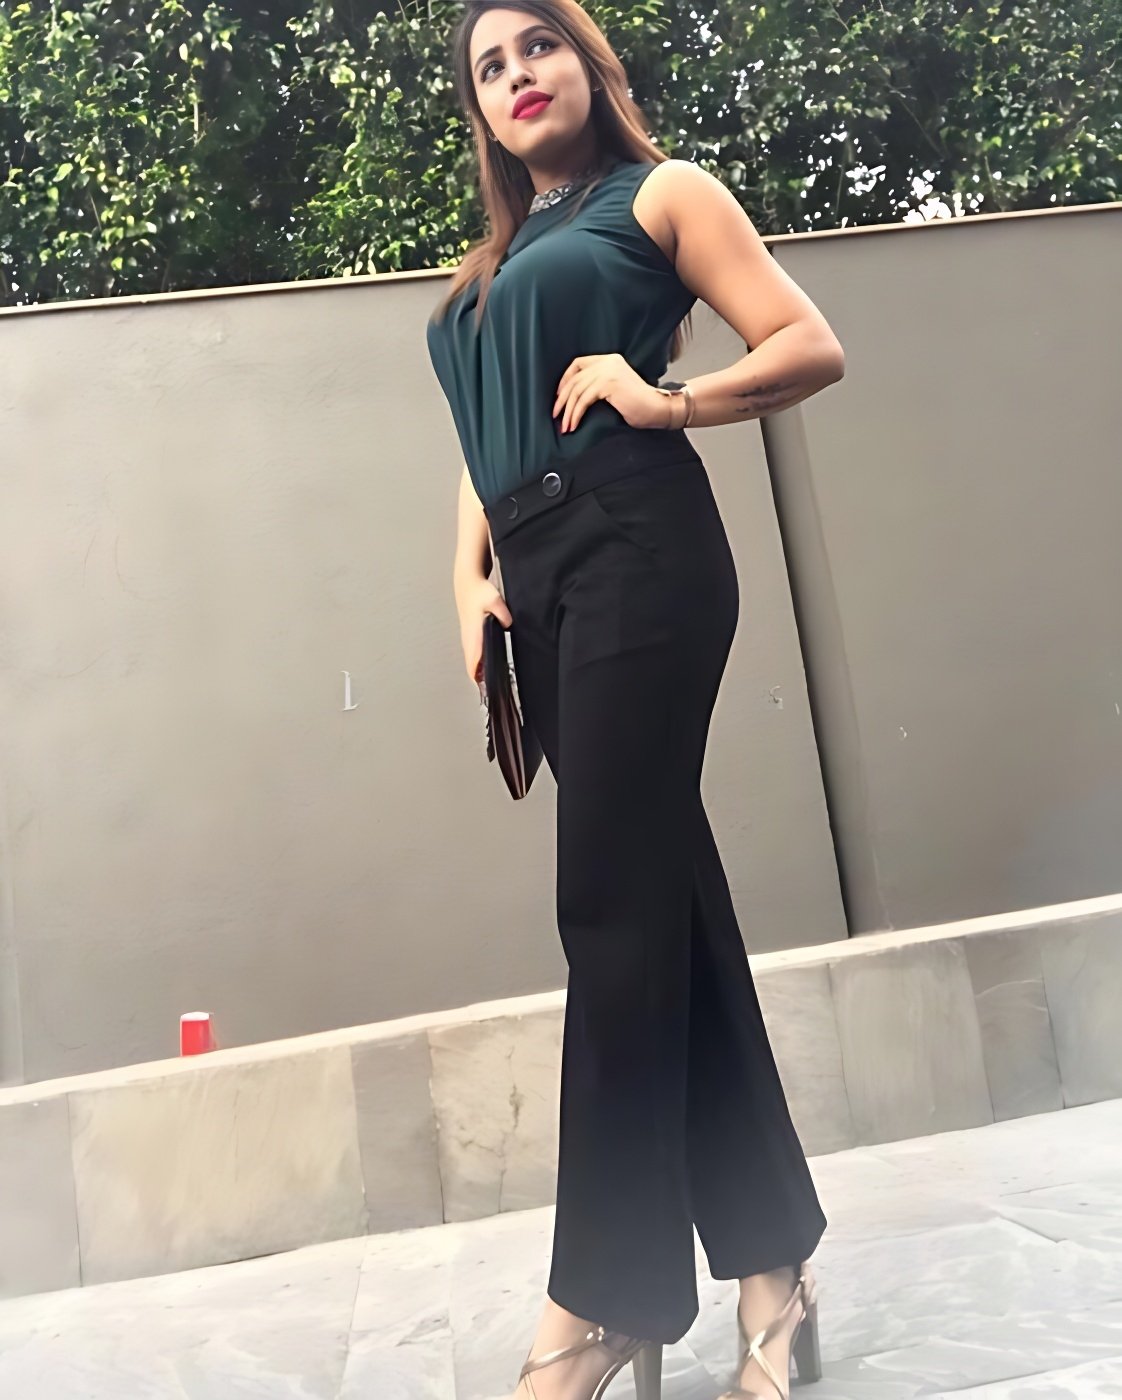 Meet Amazing Sani Singh: Top Escort Girl - model preview photo 2 